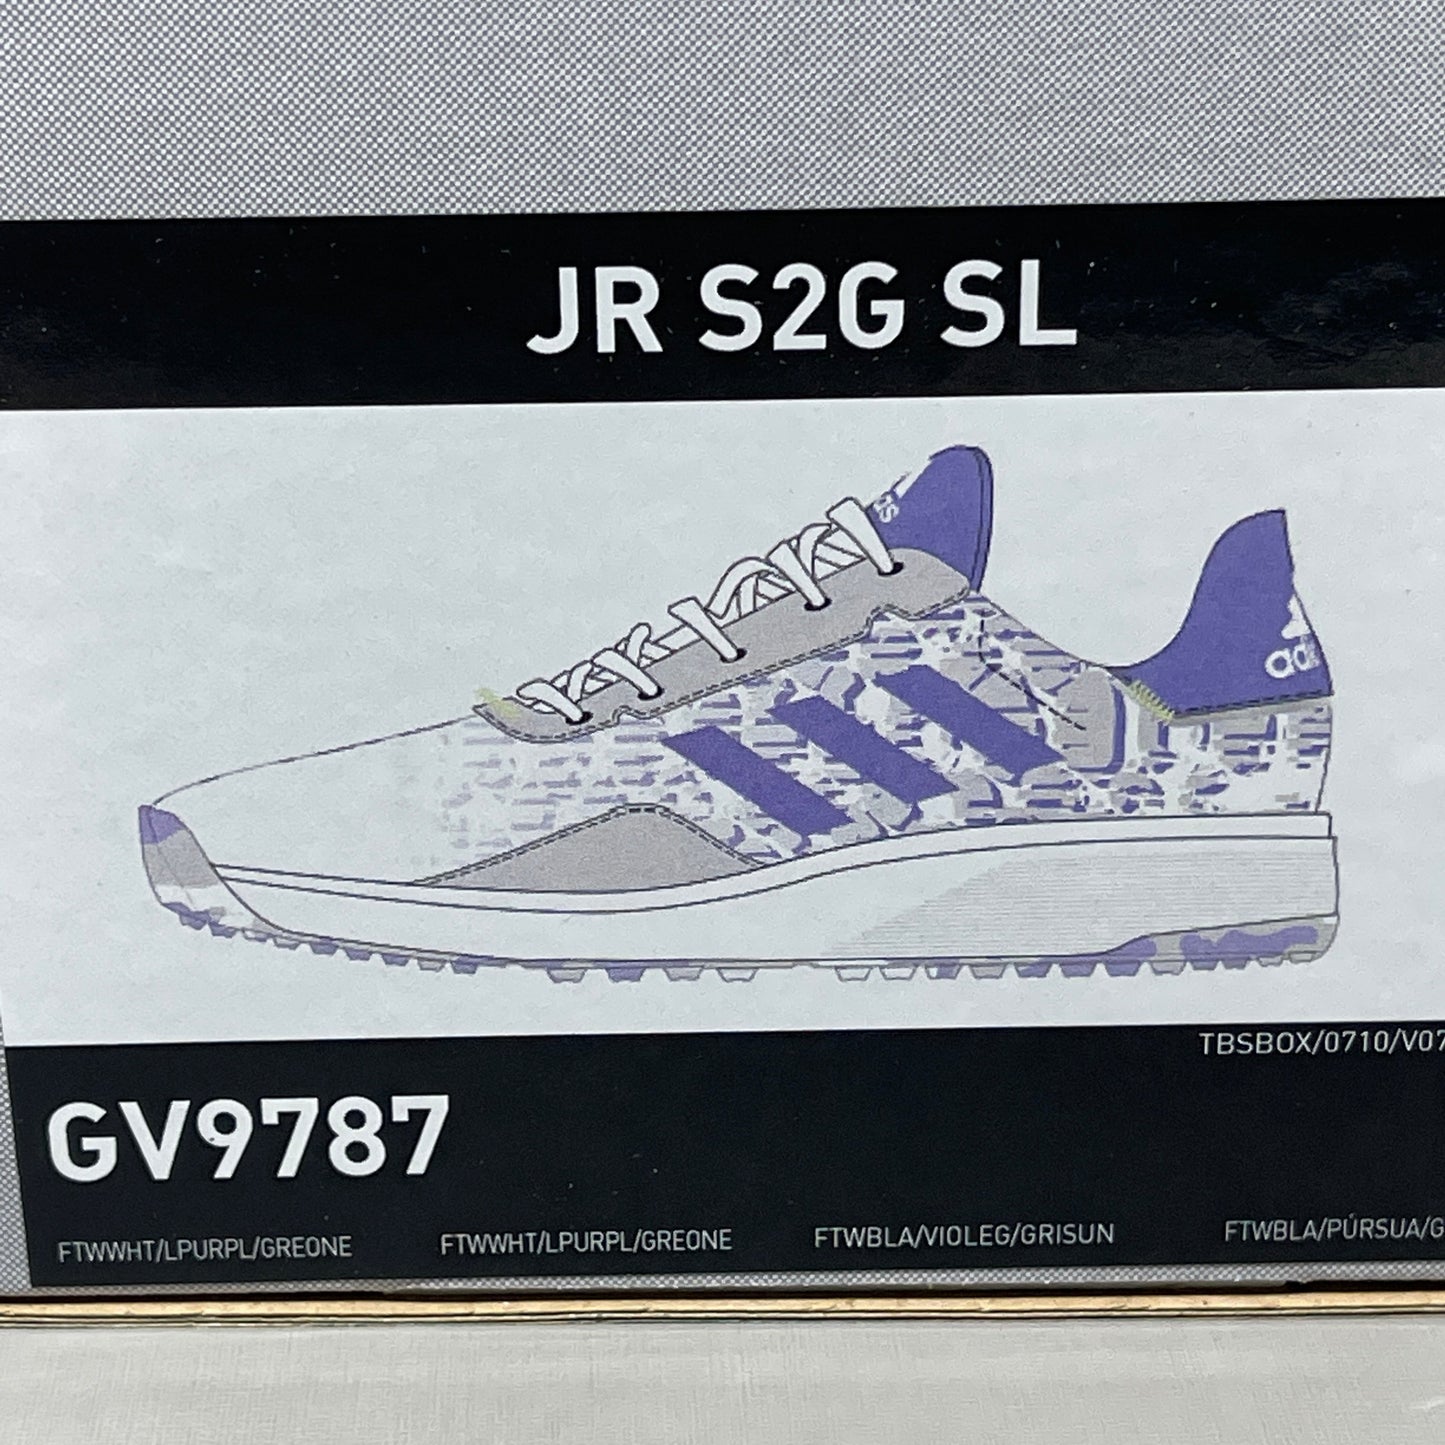 ADIDAS Golf Shoes JR S2G SL Waterproof Youth Sz 5 White / Lime / Purple GV9787 (New)